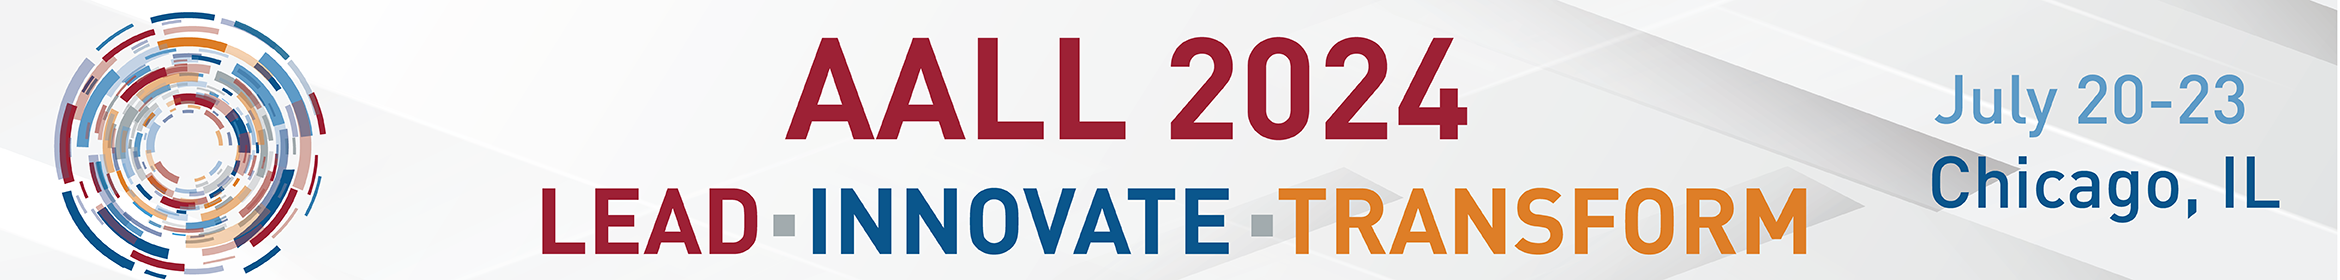 AALL 2024: Lead Innovate Transform Main banner